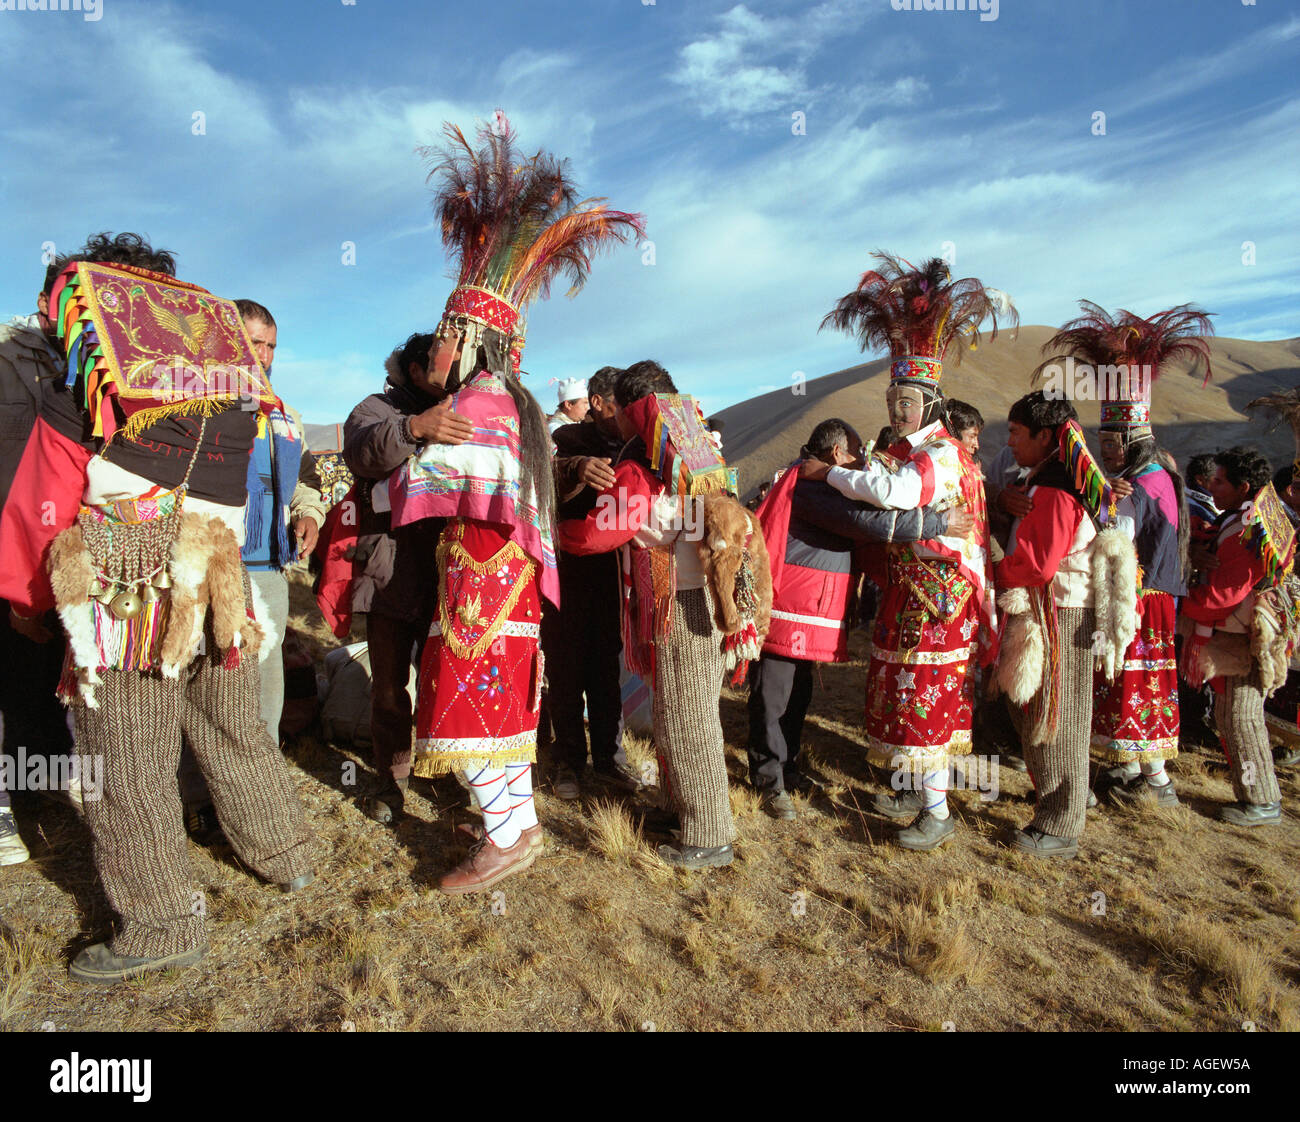 Peruvians celebrate in traditional costume honoring the sunrise at the Festival De Qoylluriti in the  mountains of Peru Stock Photo